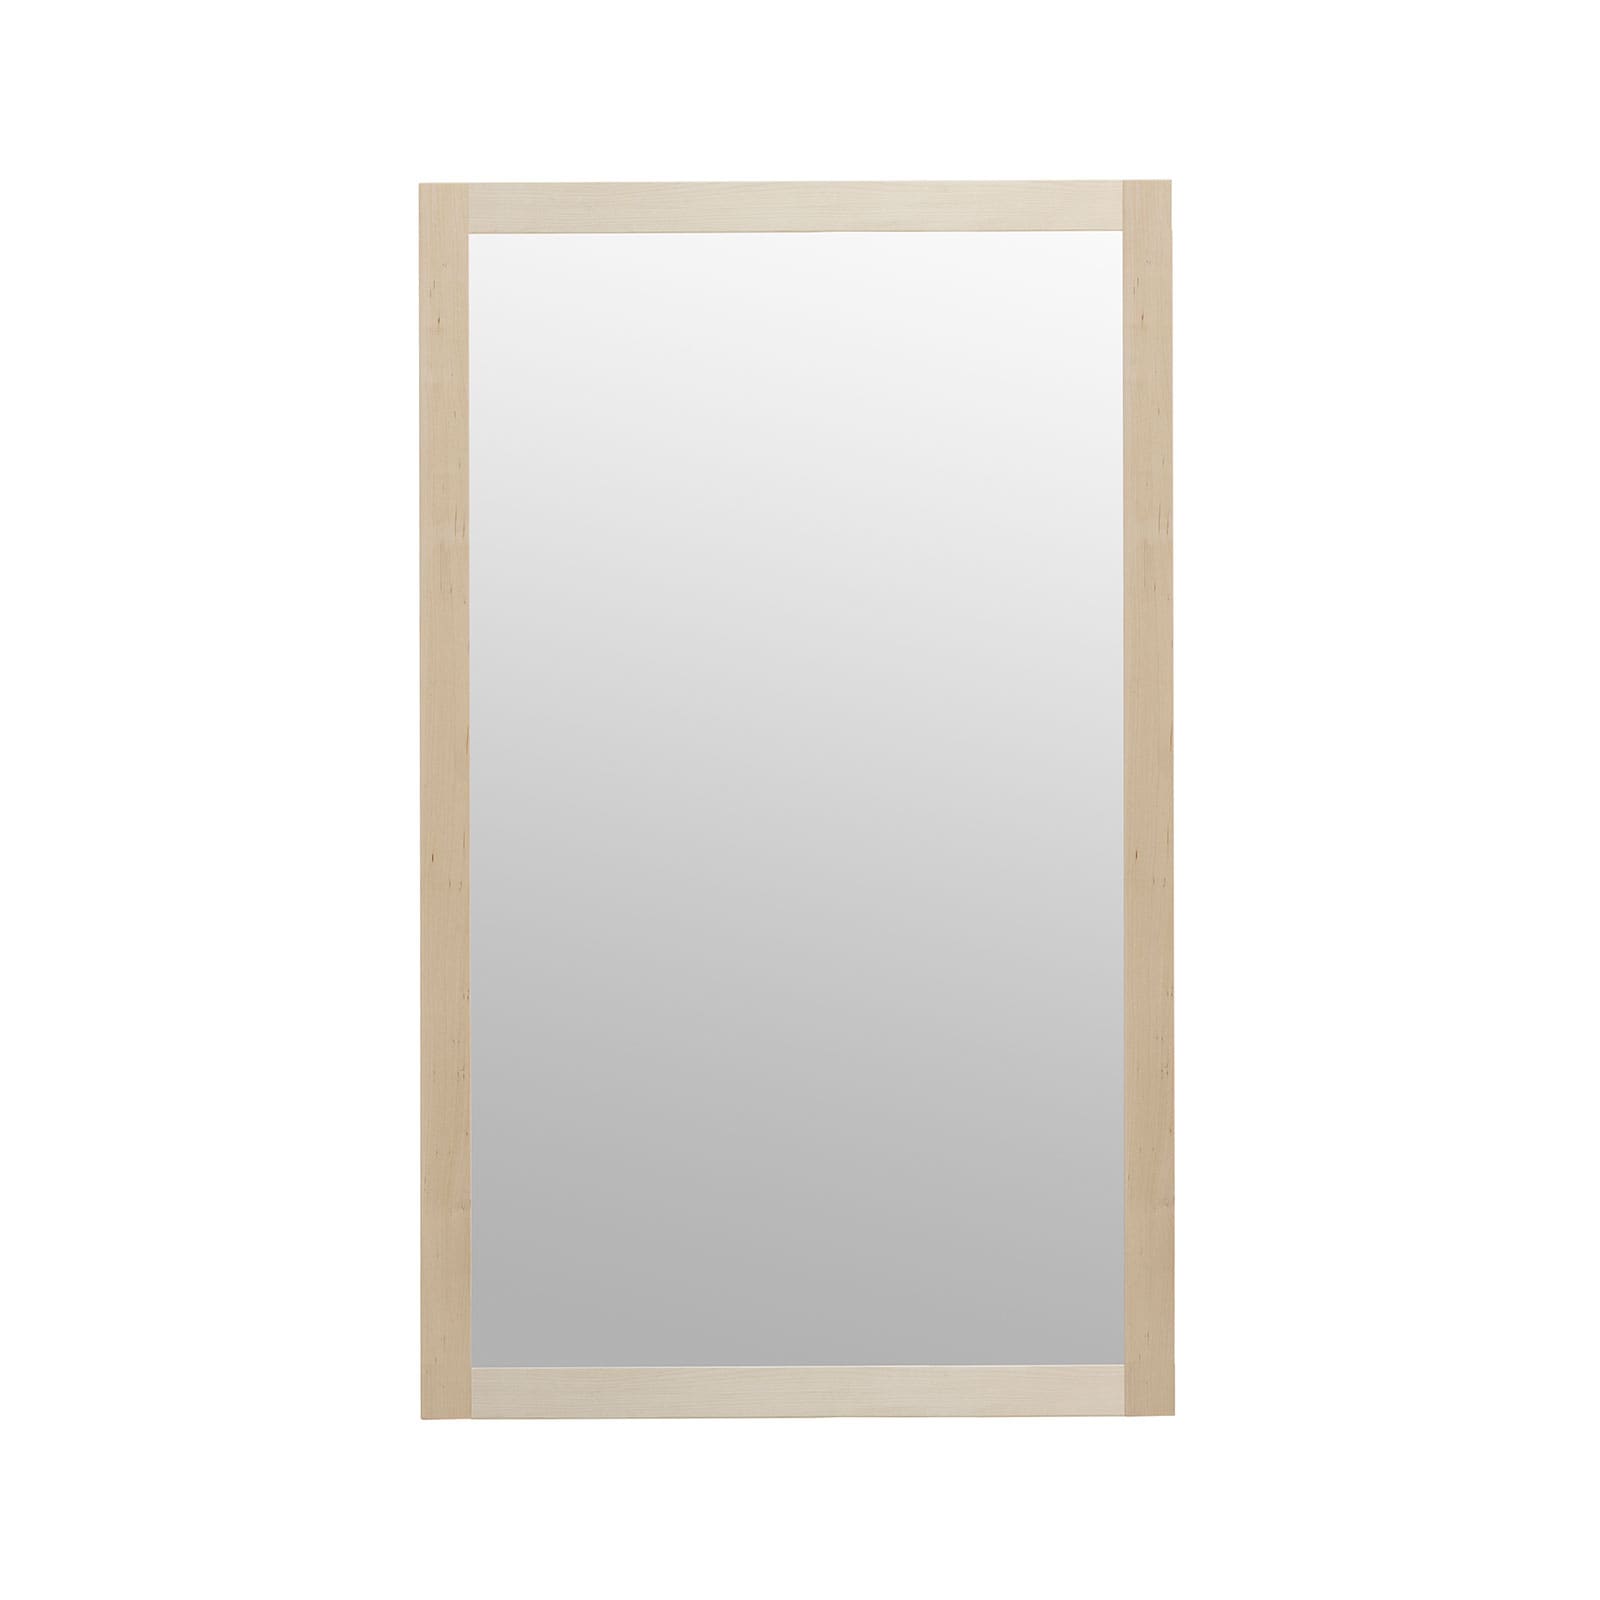 Spegel 120cm Björk obehandlad/vitolja Norrgavel